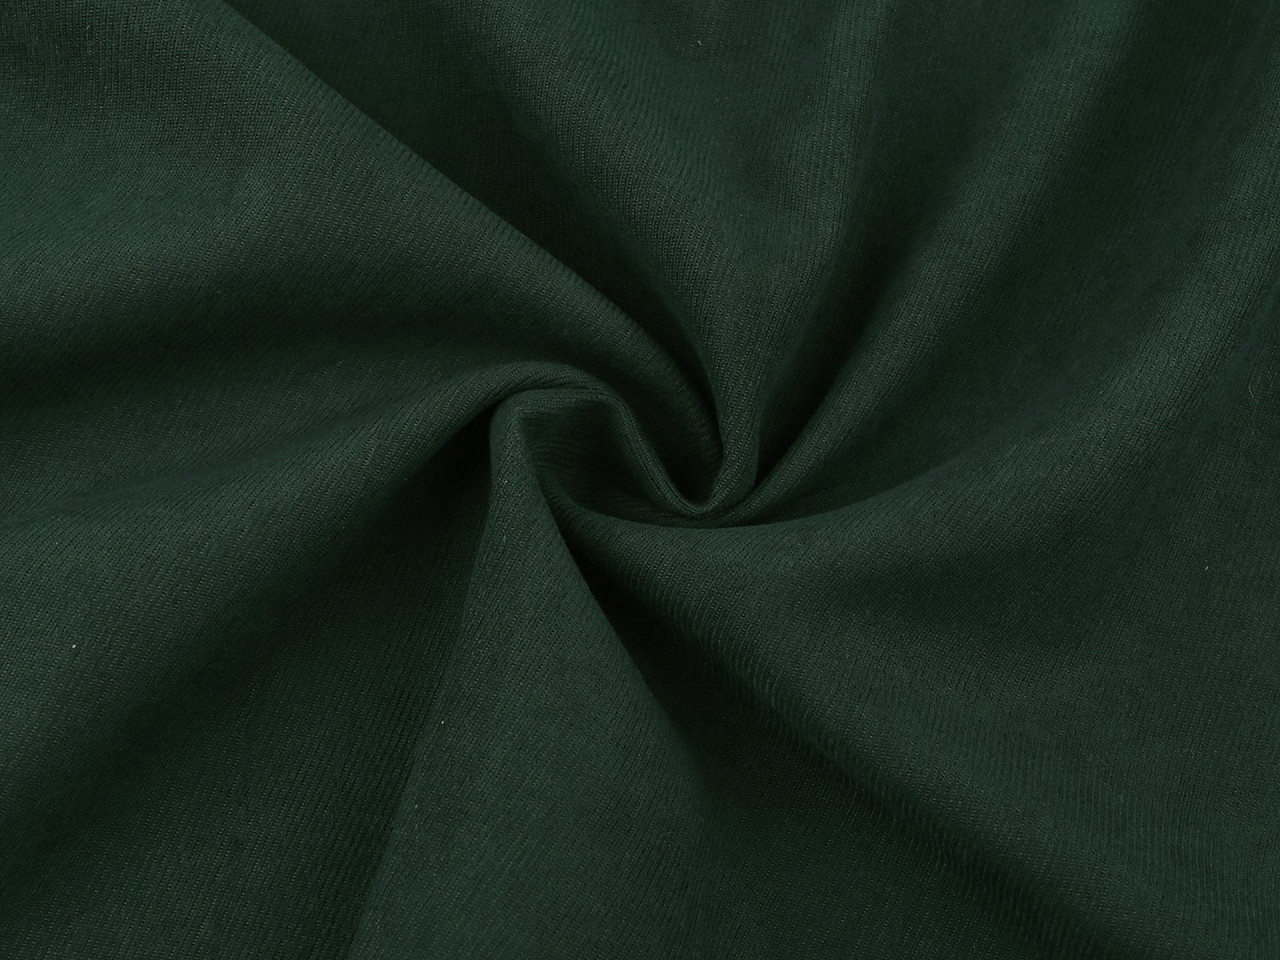 Kostýmovka s keprovou vazbou, barva 7 zelená tmavá